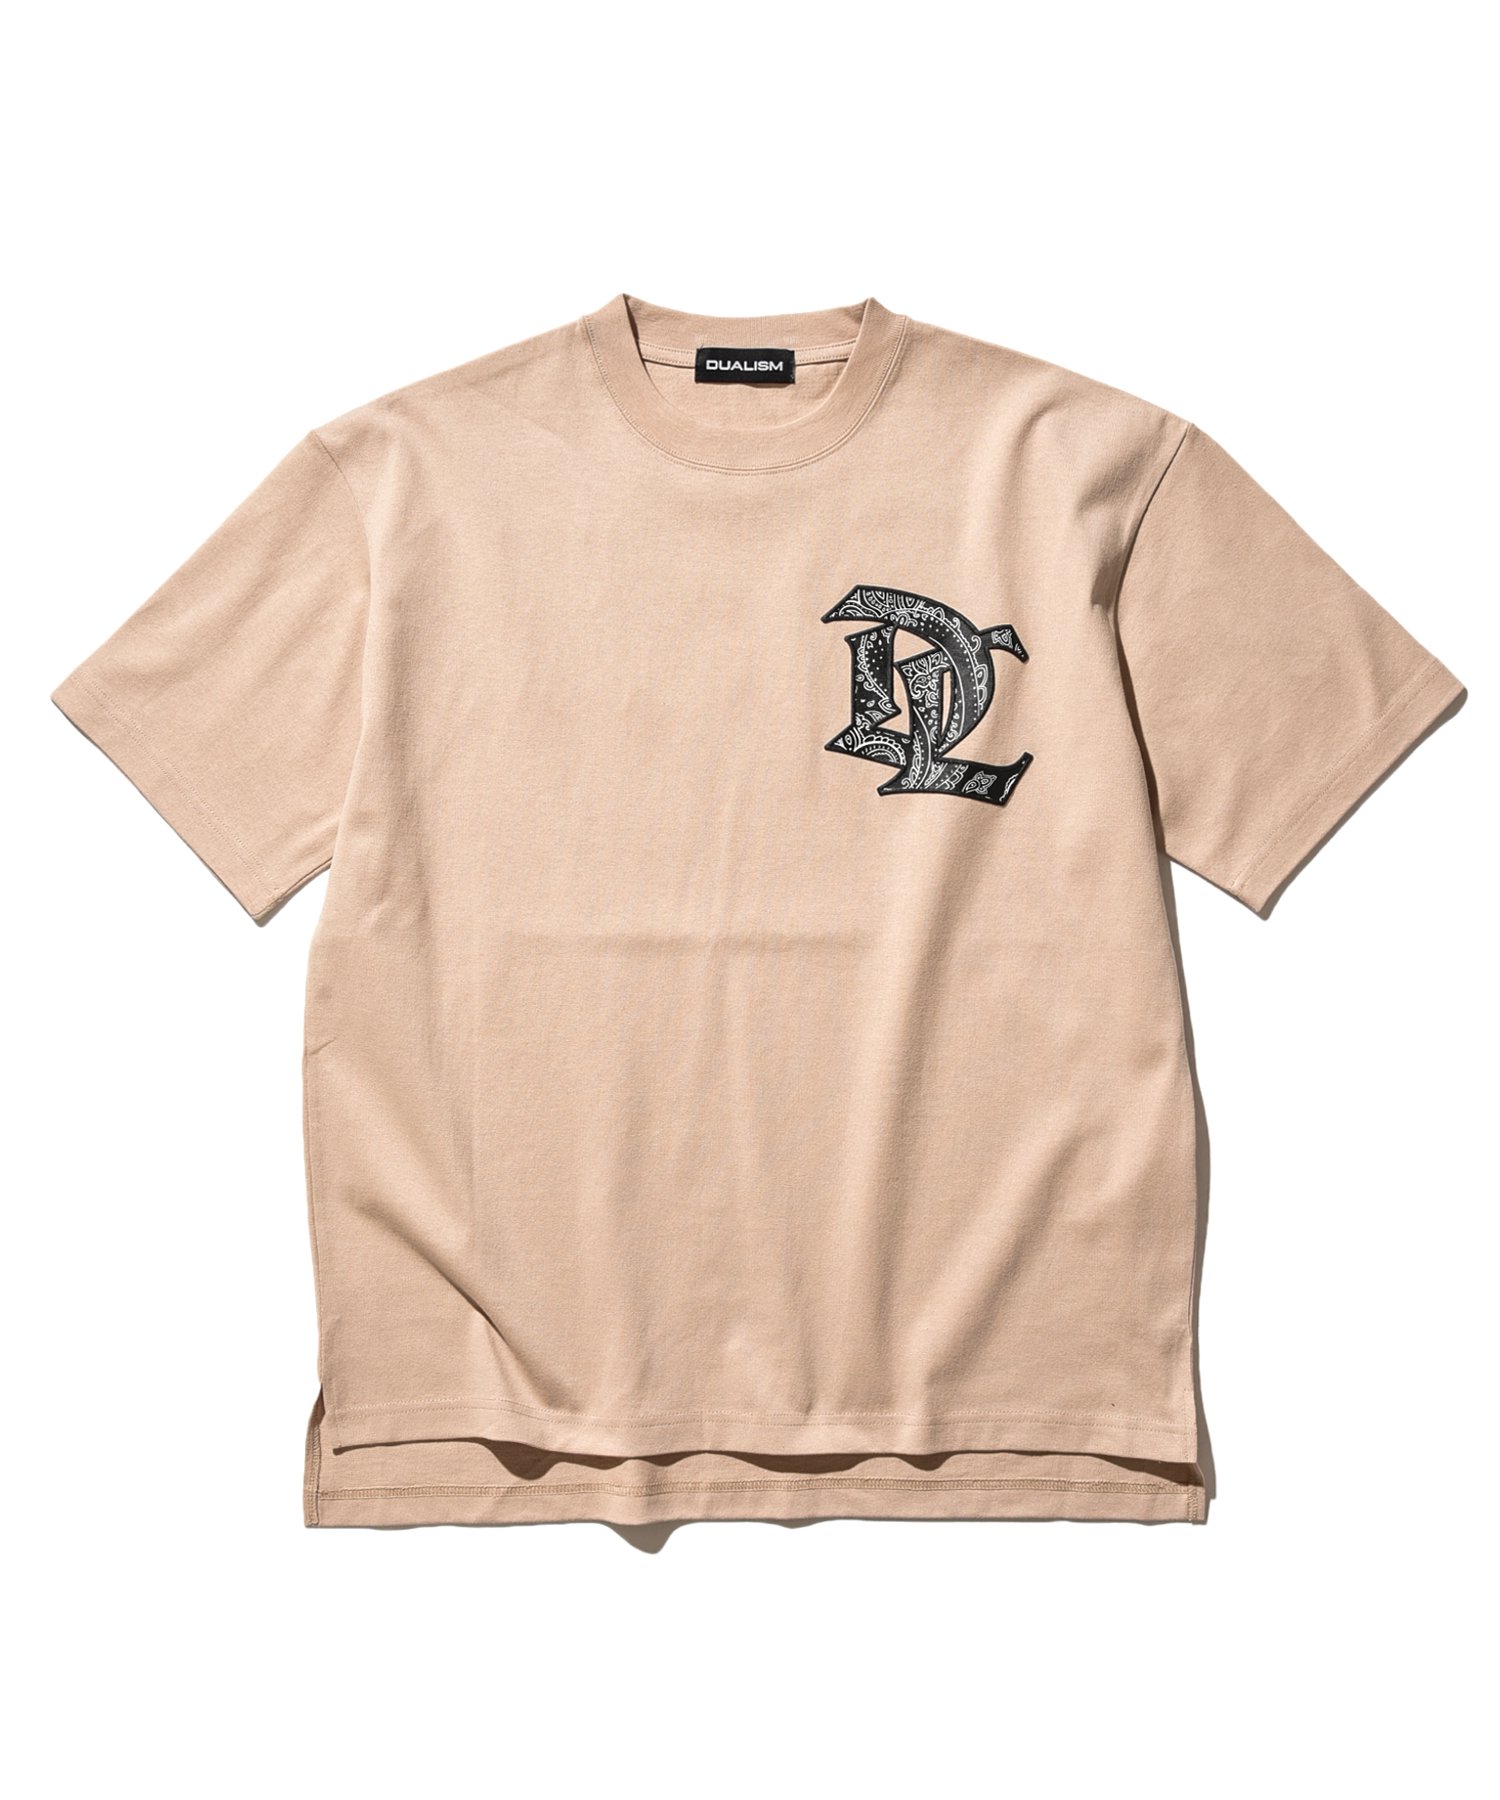 DUALISM/DLSM(デュアリズム) Tシャツ DUALISM PAISLEY MULTI FONT TEE 